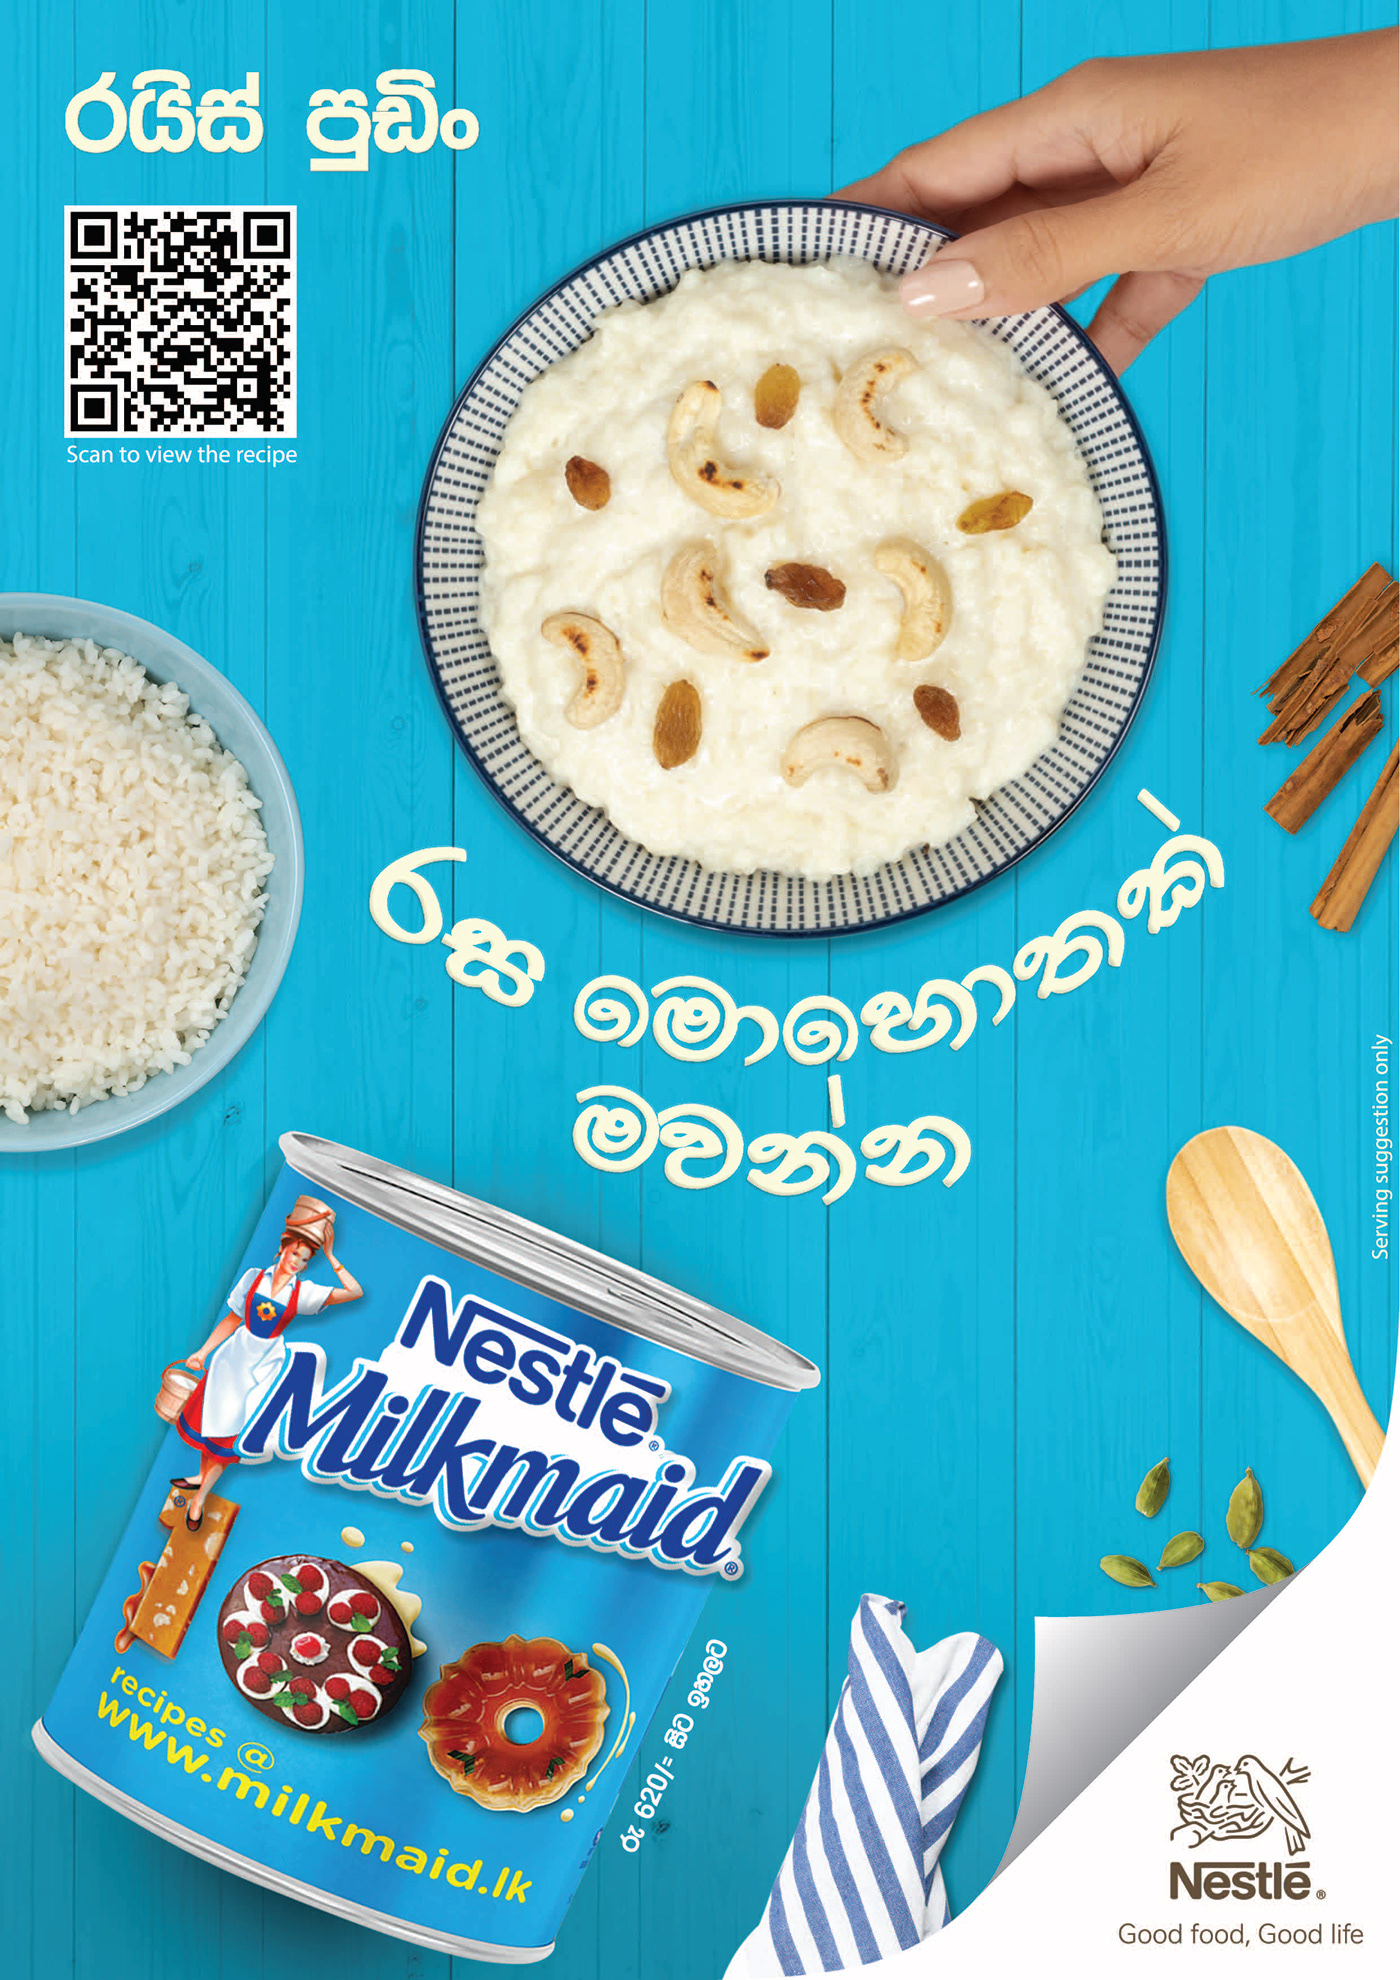 Advertising  colombo lightroom milkmaid nestle photographer Photography  photoshoot poster Sri lanka